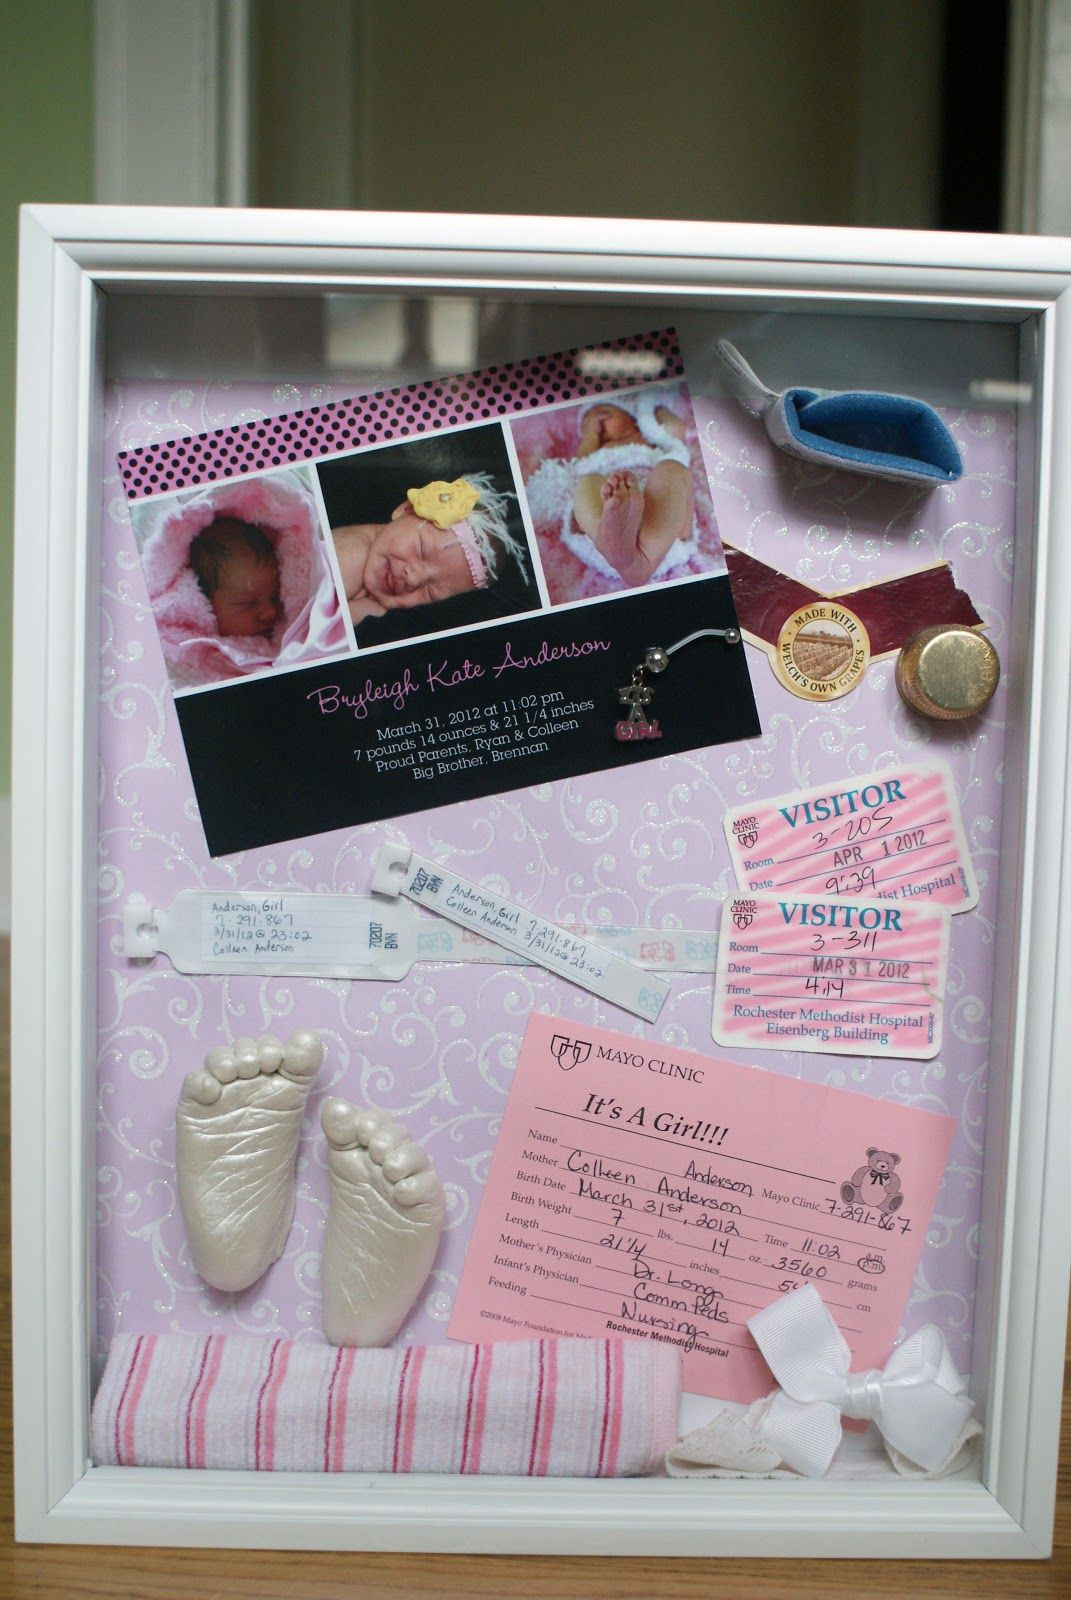 Best ideas about DIY Keepsake Box
. Save or Pin DIY Beautiful Memory Box Use baby mementos hospital Now.